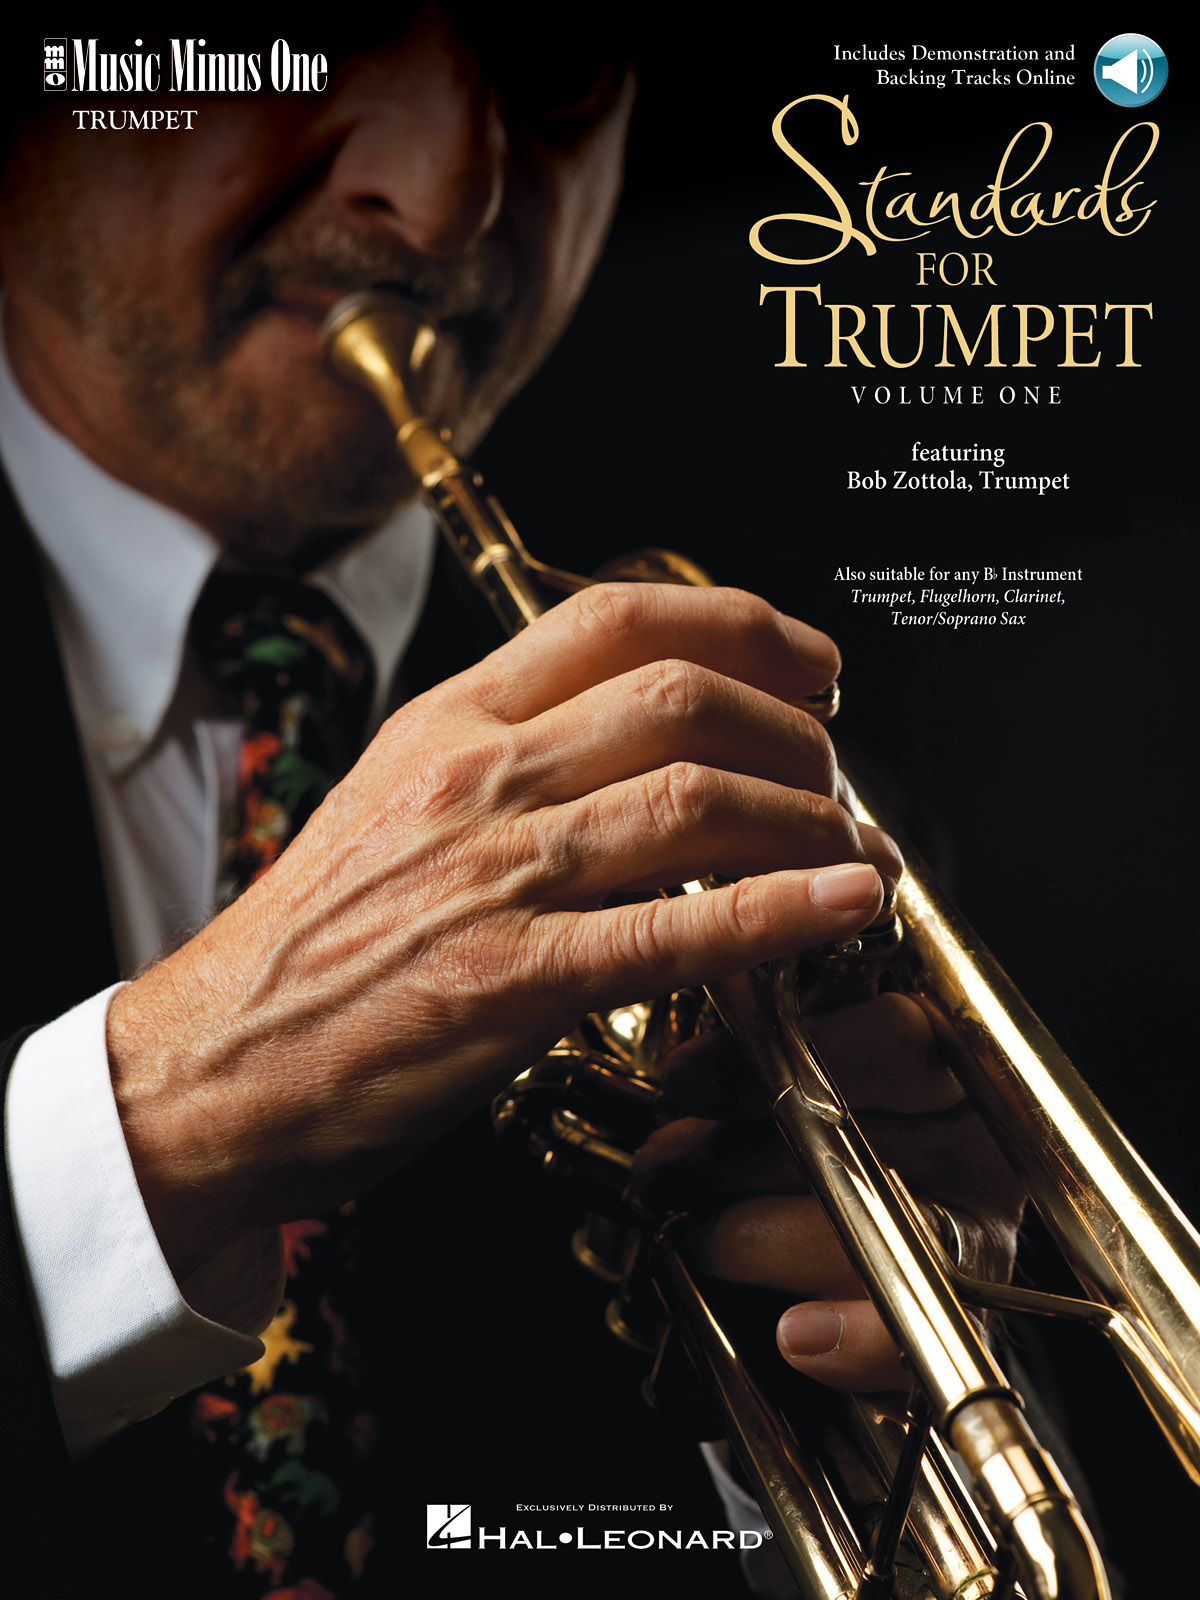 Standards for Trumpet - Vol. 1 noty pro trumpetu